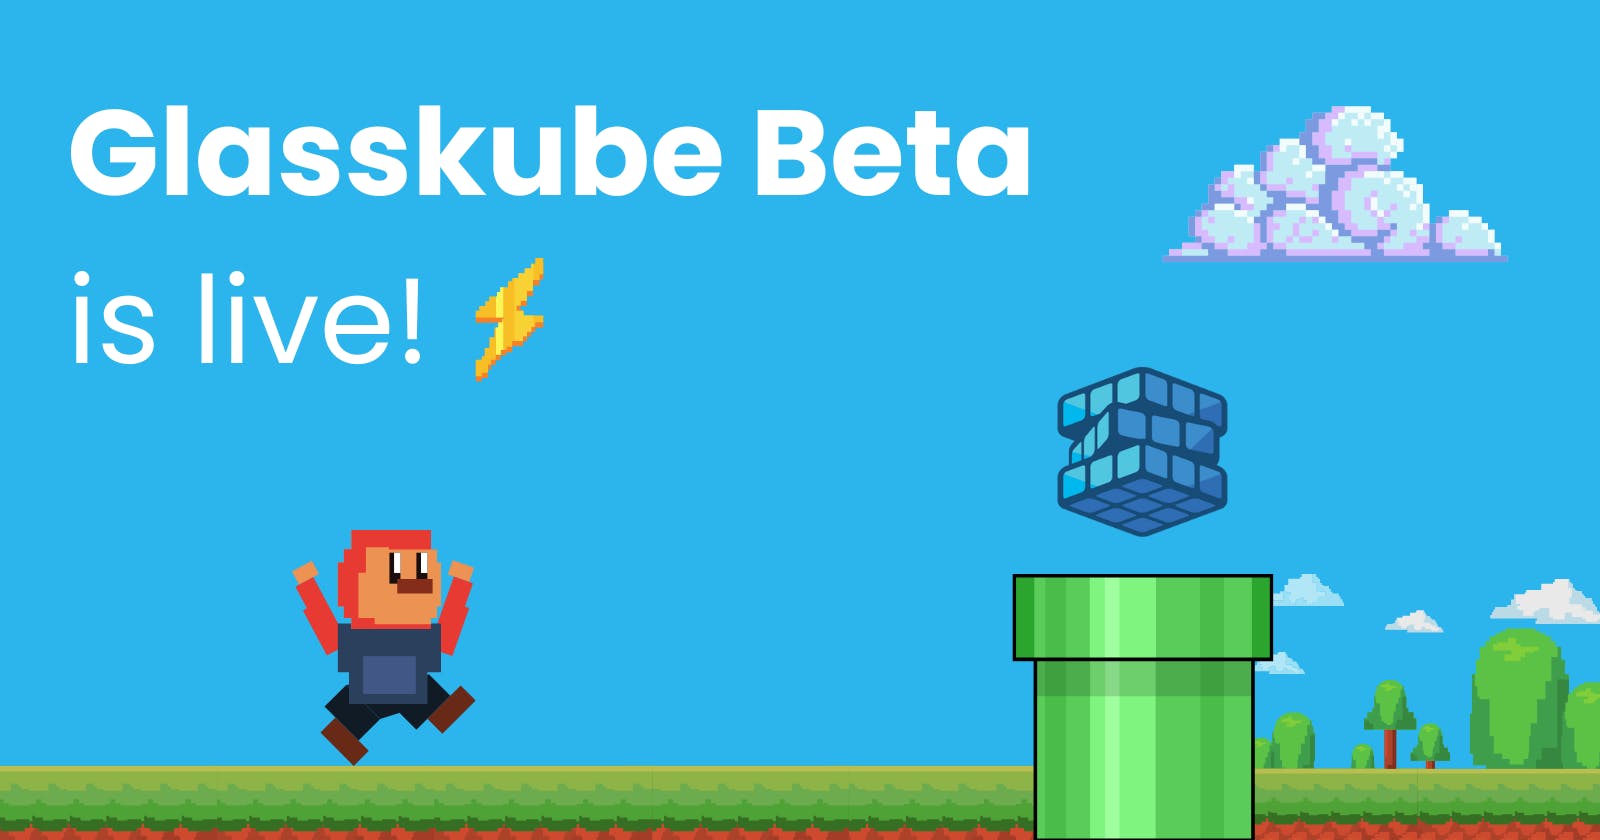 Glasskube Beta is live!